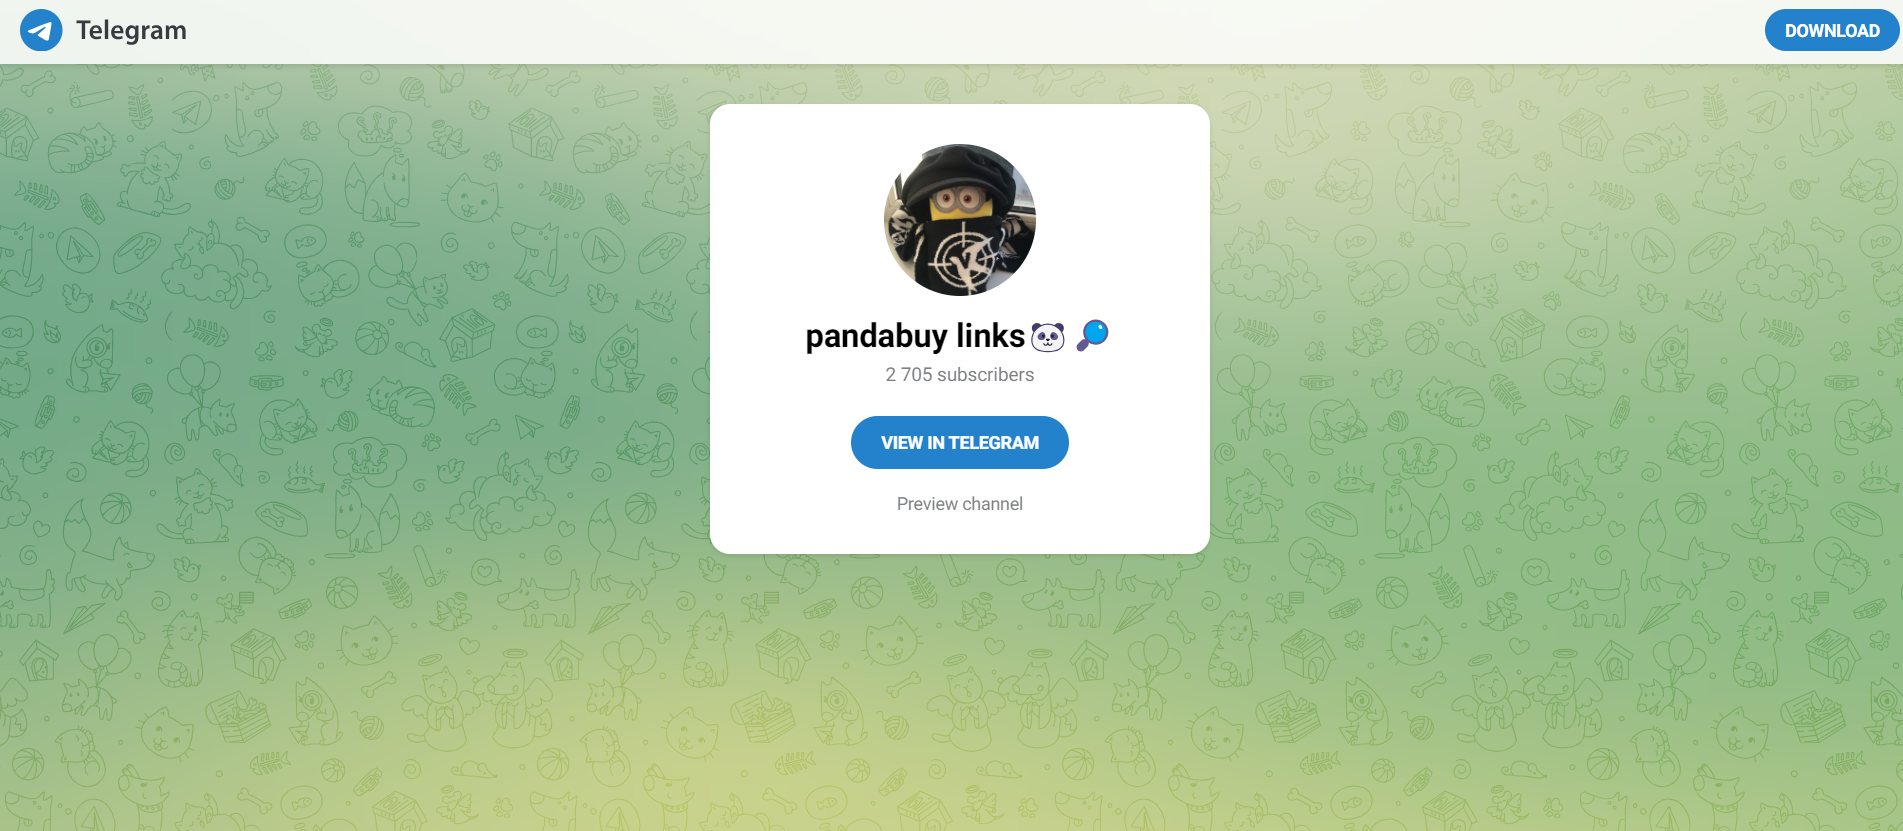 Pandabuy Links